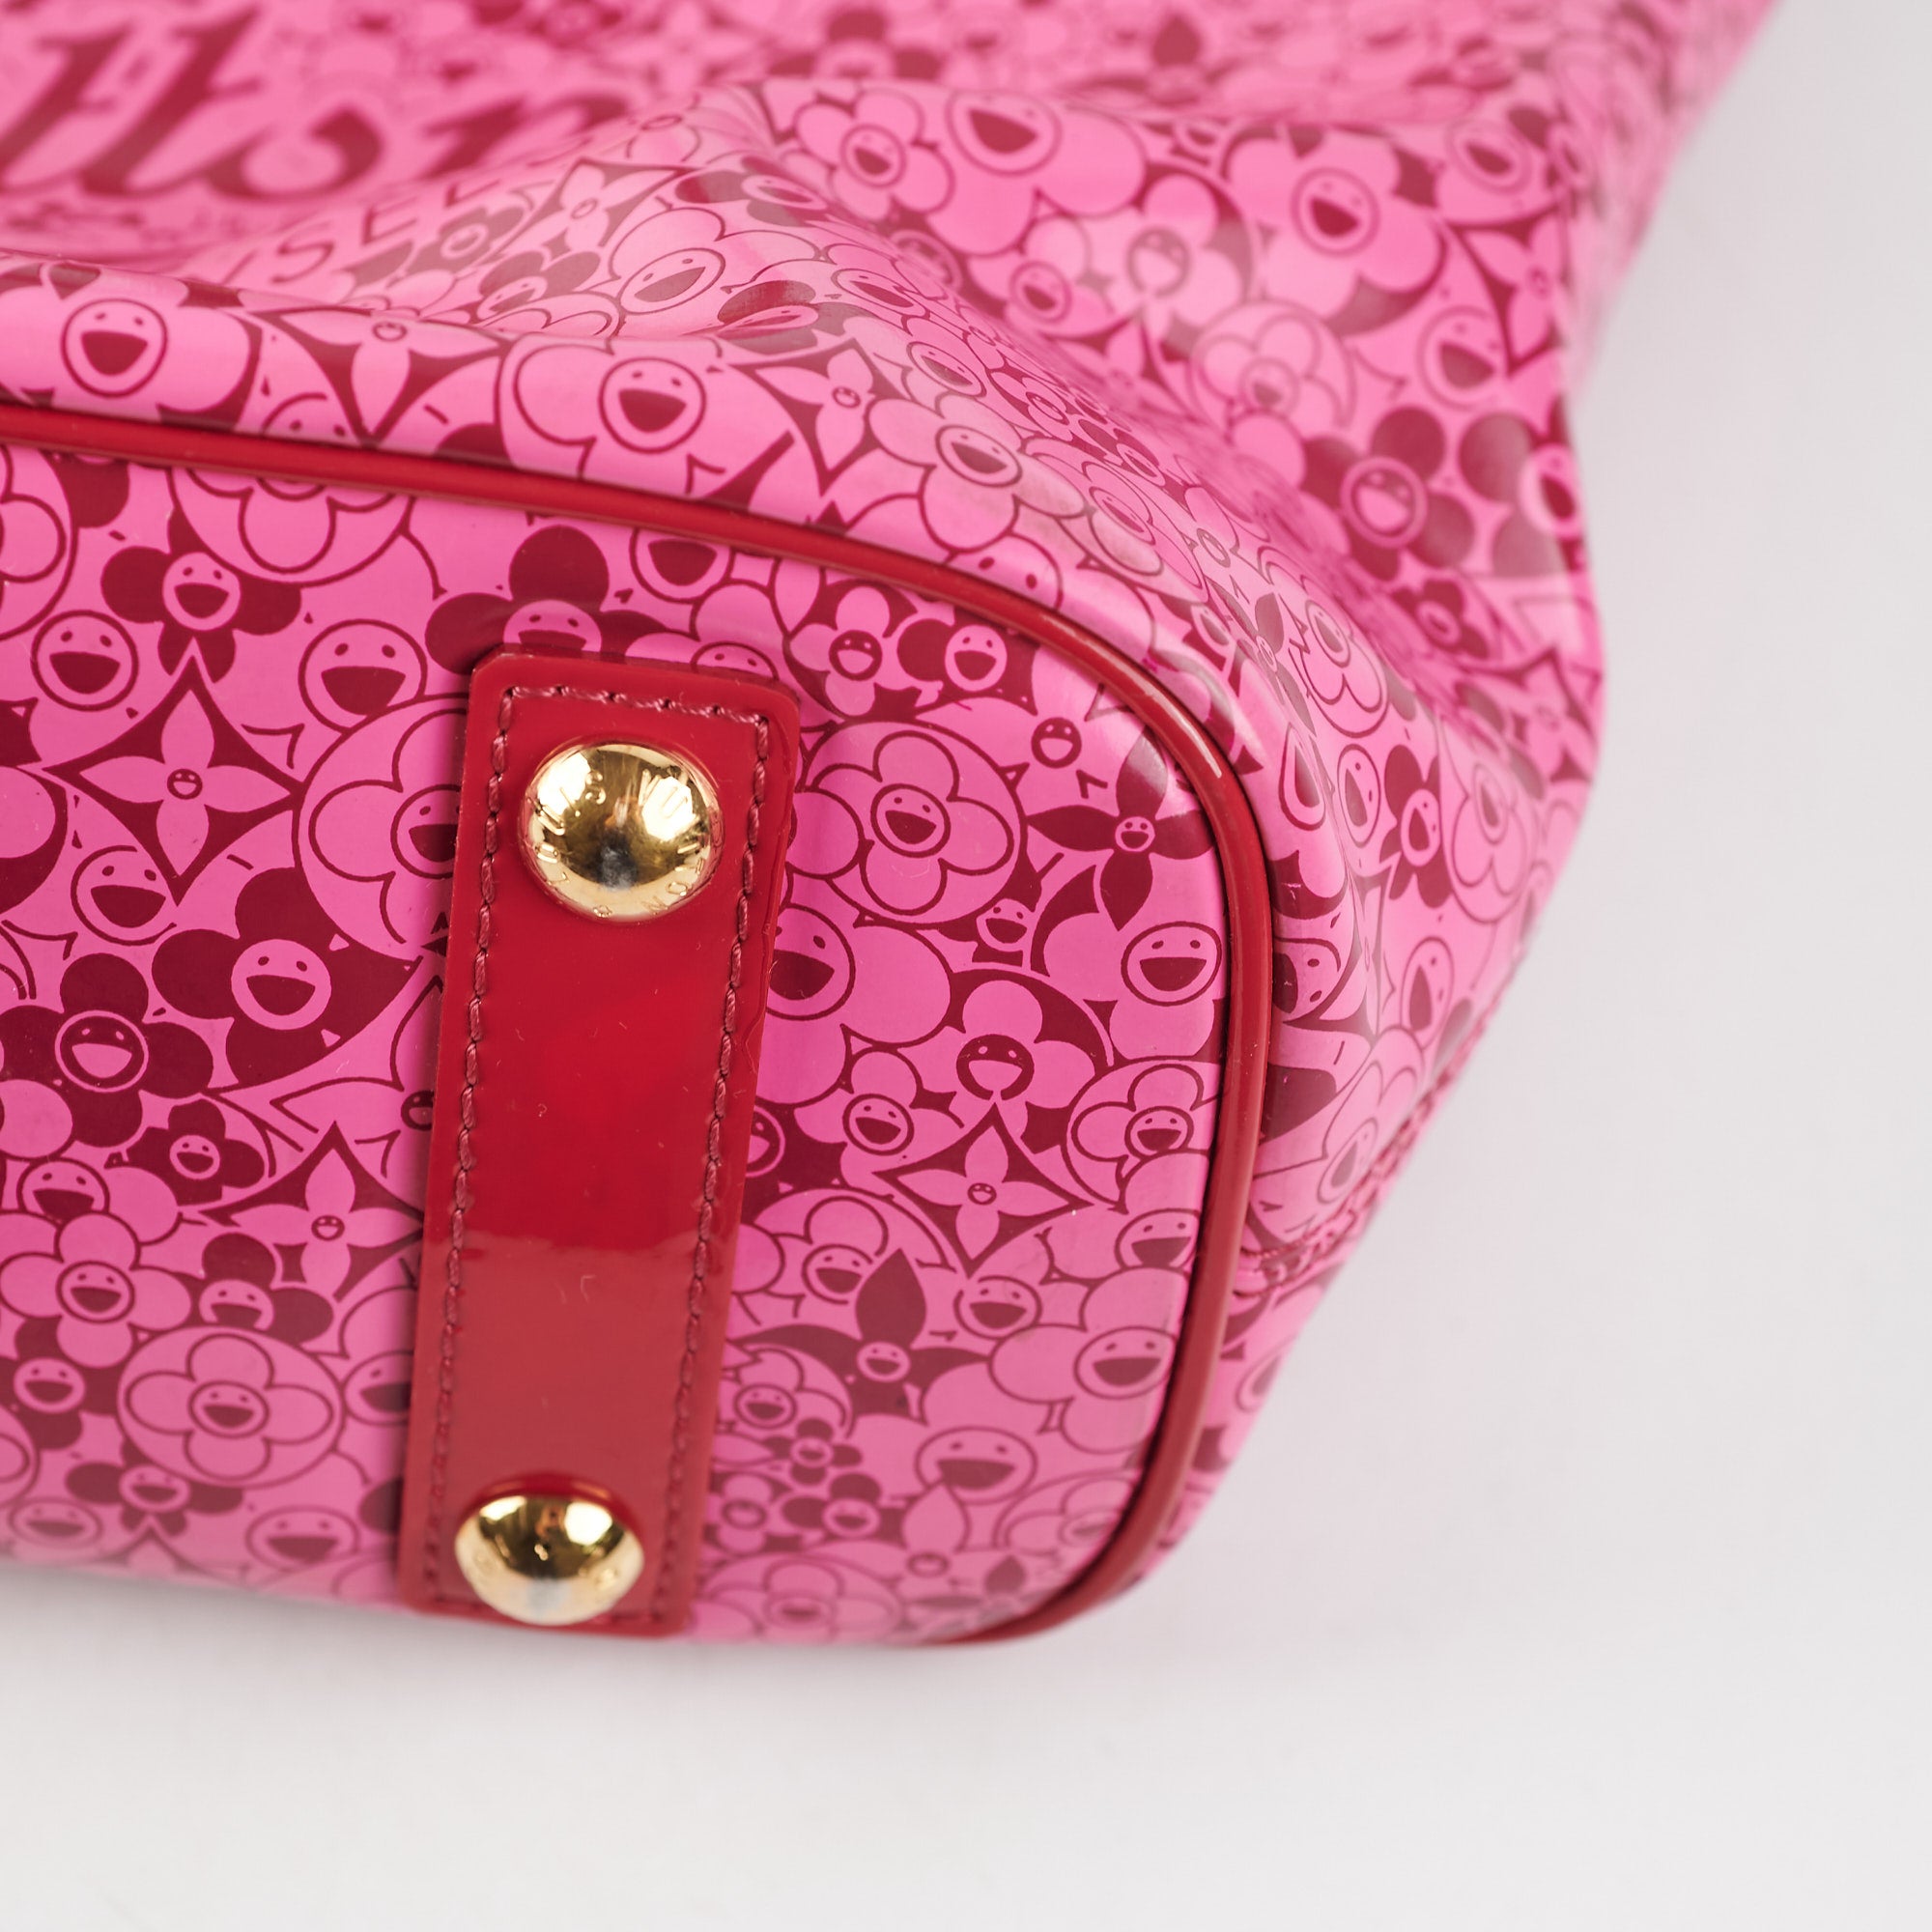 Louis Vuitton Cosmic Blossom Handbag